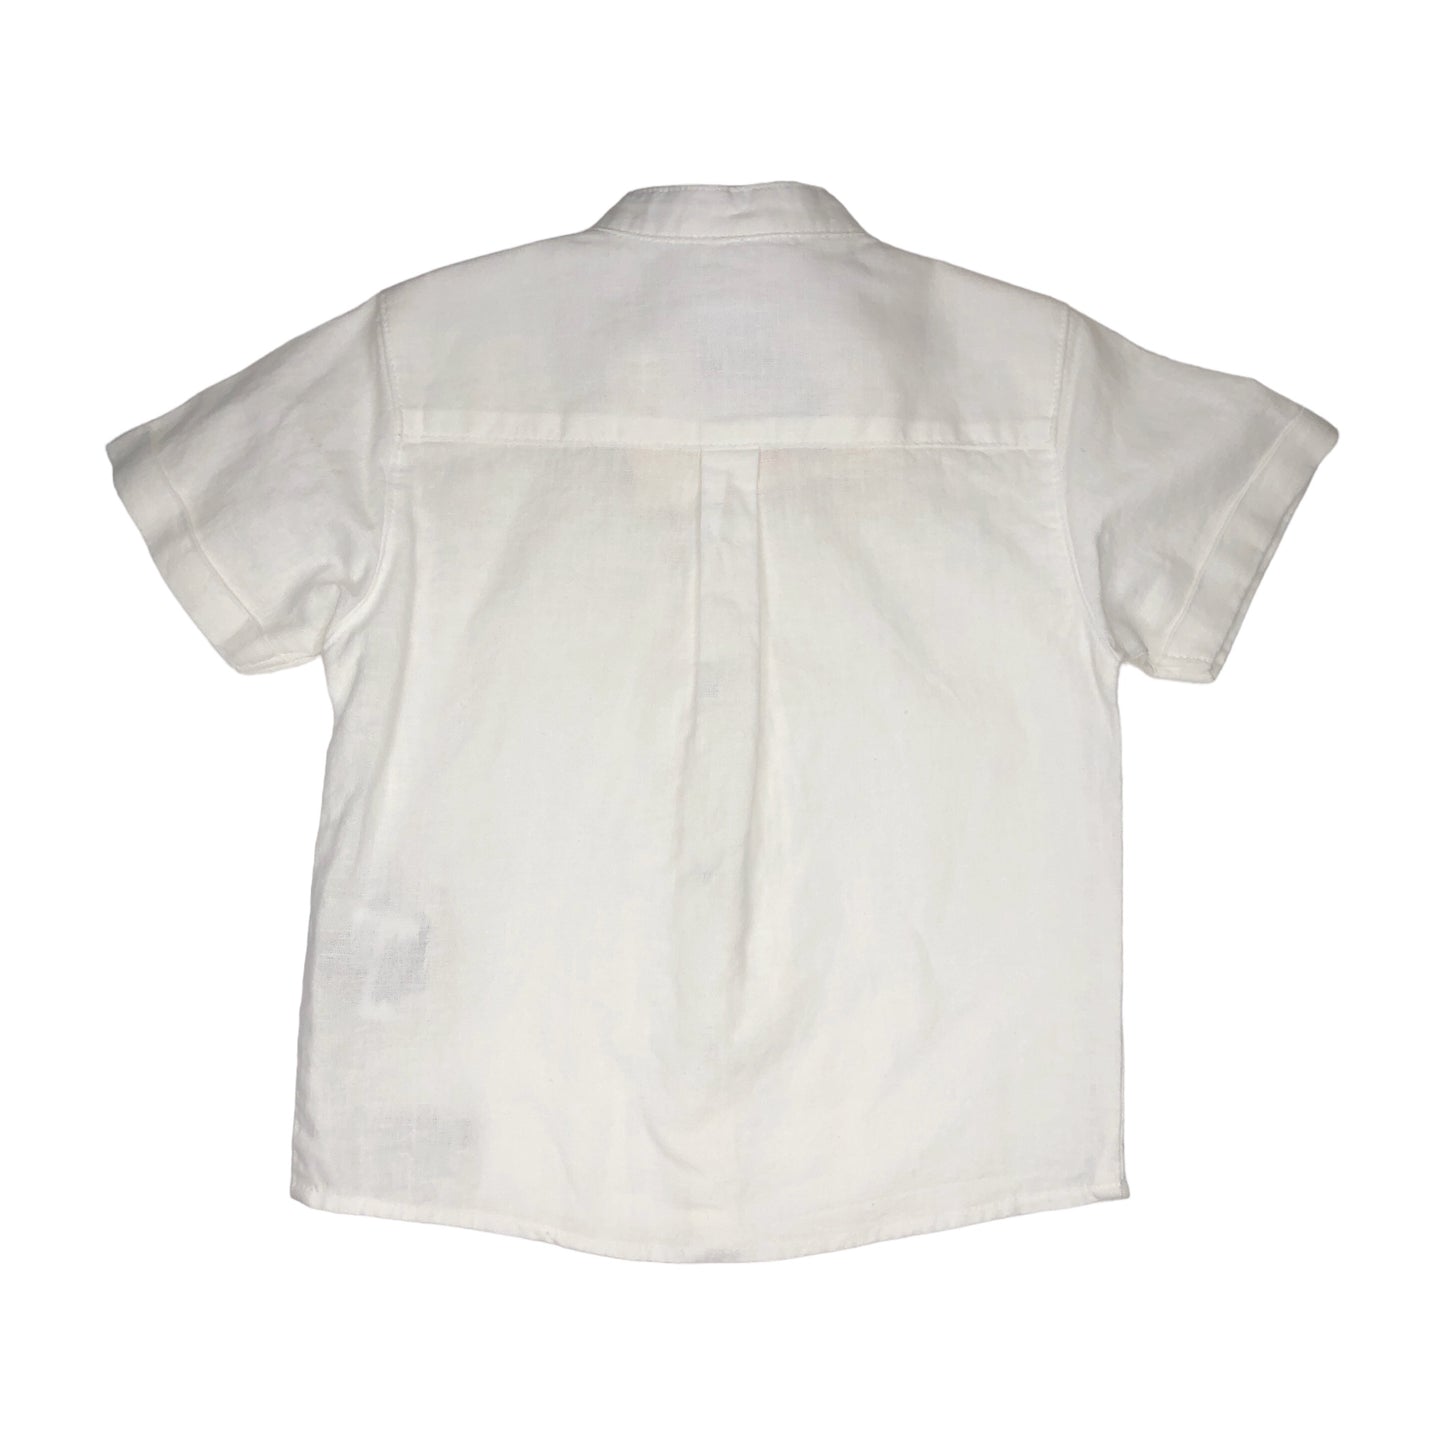 Camisa manga corta blanca para bebé niño Losan